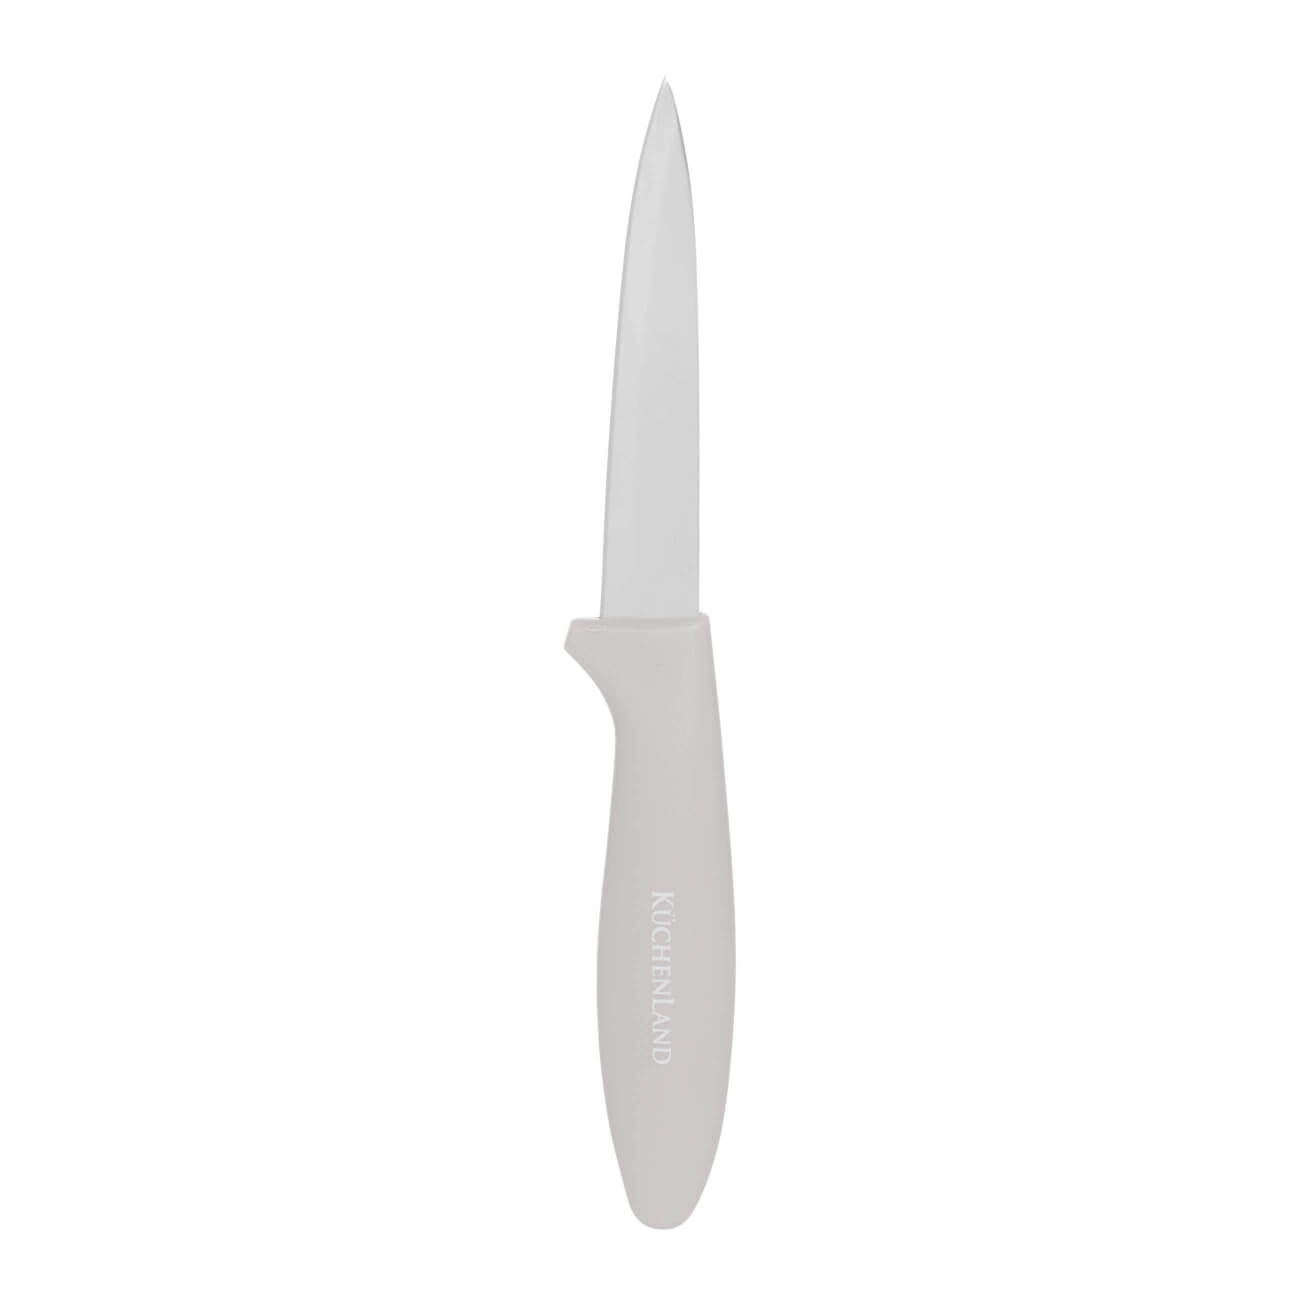 Нож для чистки овощей, 9 см, сталь/пластик, серо-коричневый, Regular нож для чистки овощей 8 см сталь пластик серо коричневый regular